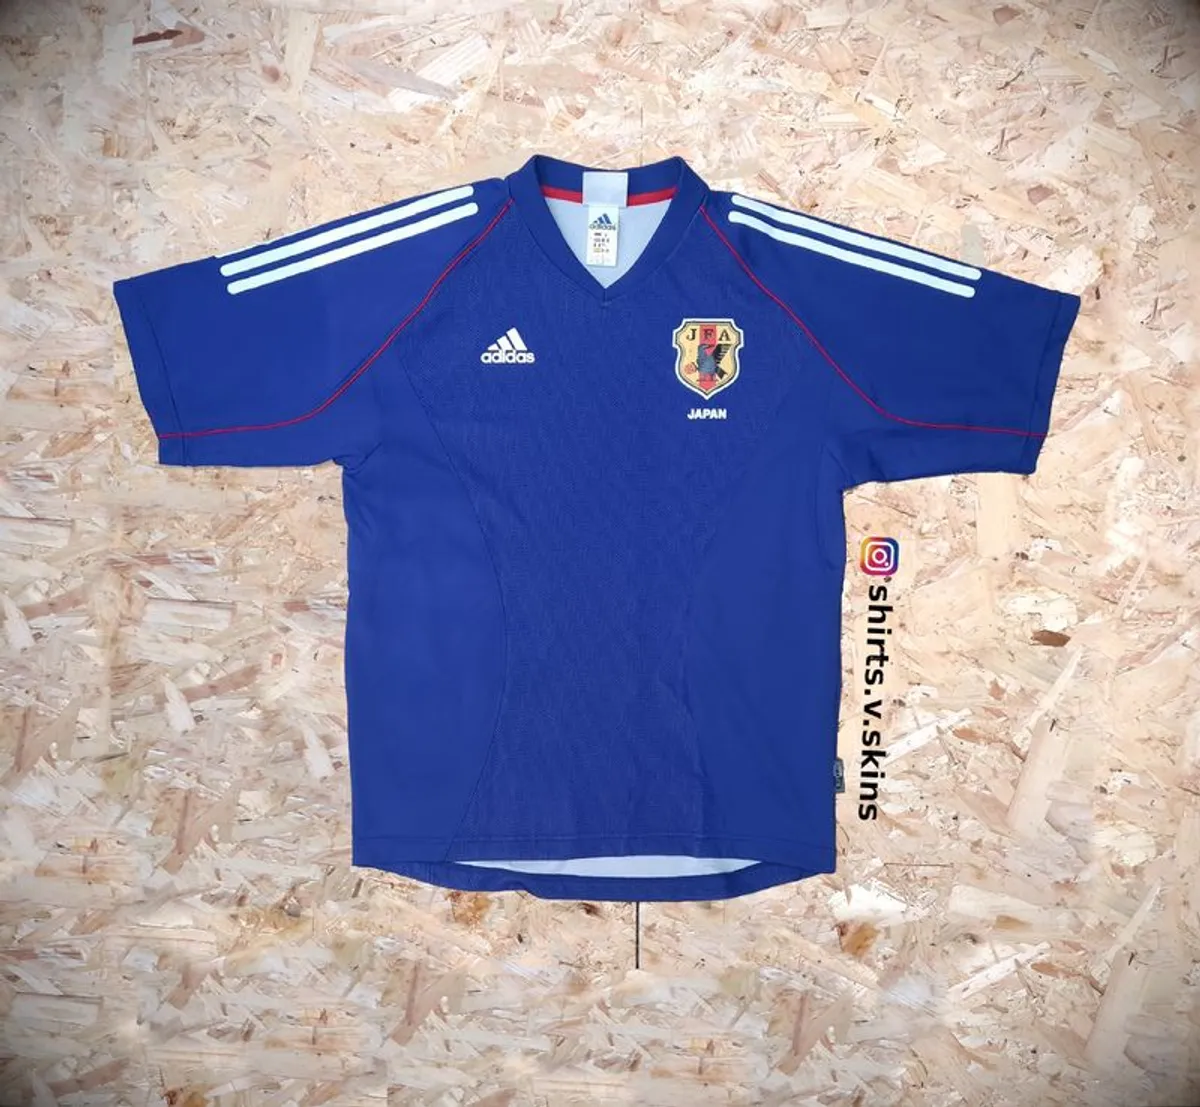 FREE POST Vintage Japan Jersey 2002 adidas shirt Soccer Football Vintage Retro Samurai Blue Nihon